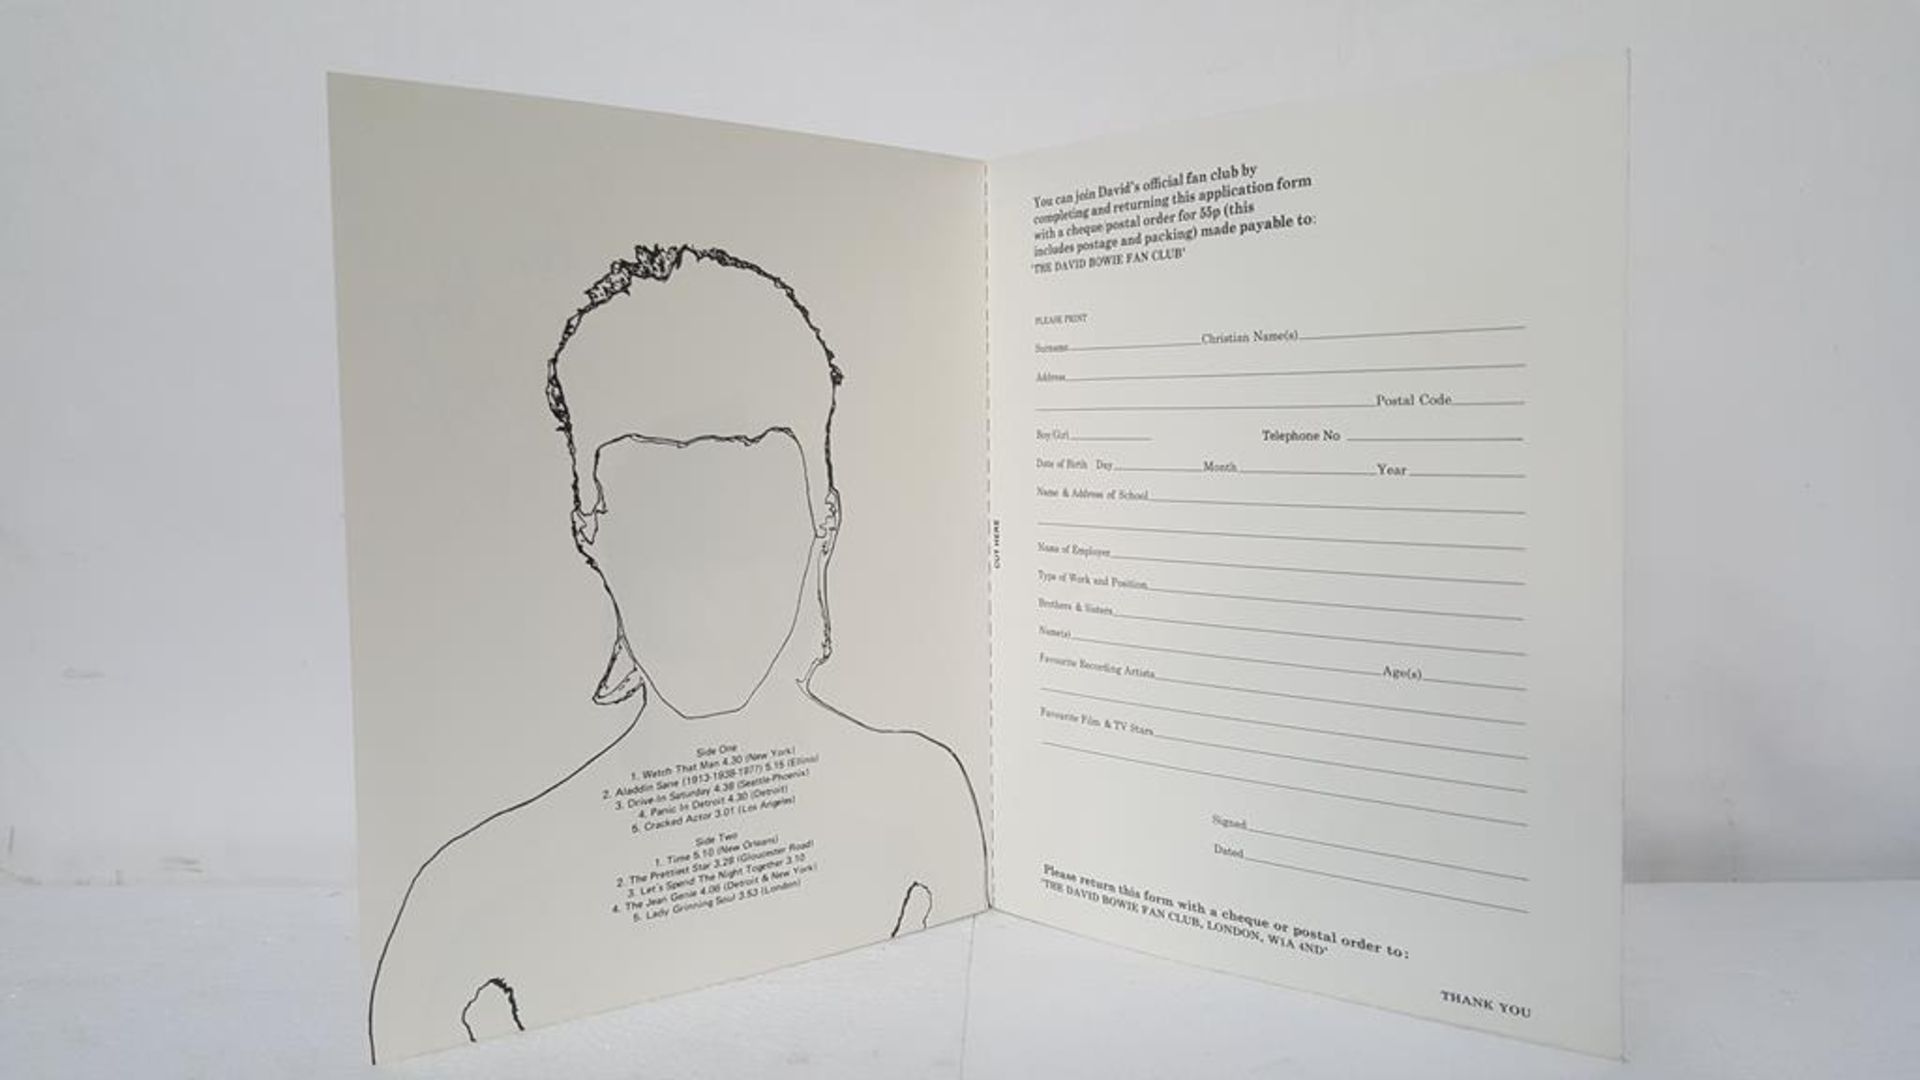 David Bowie 'Aladdin Sane' LP with signed Fan Membership Leaflet - Image 9 of 9